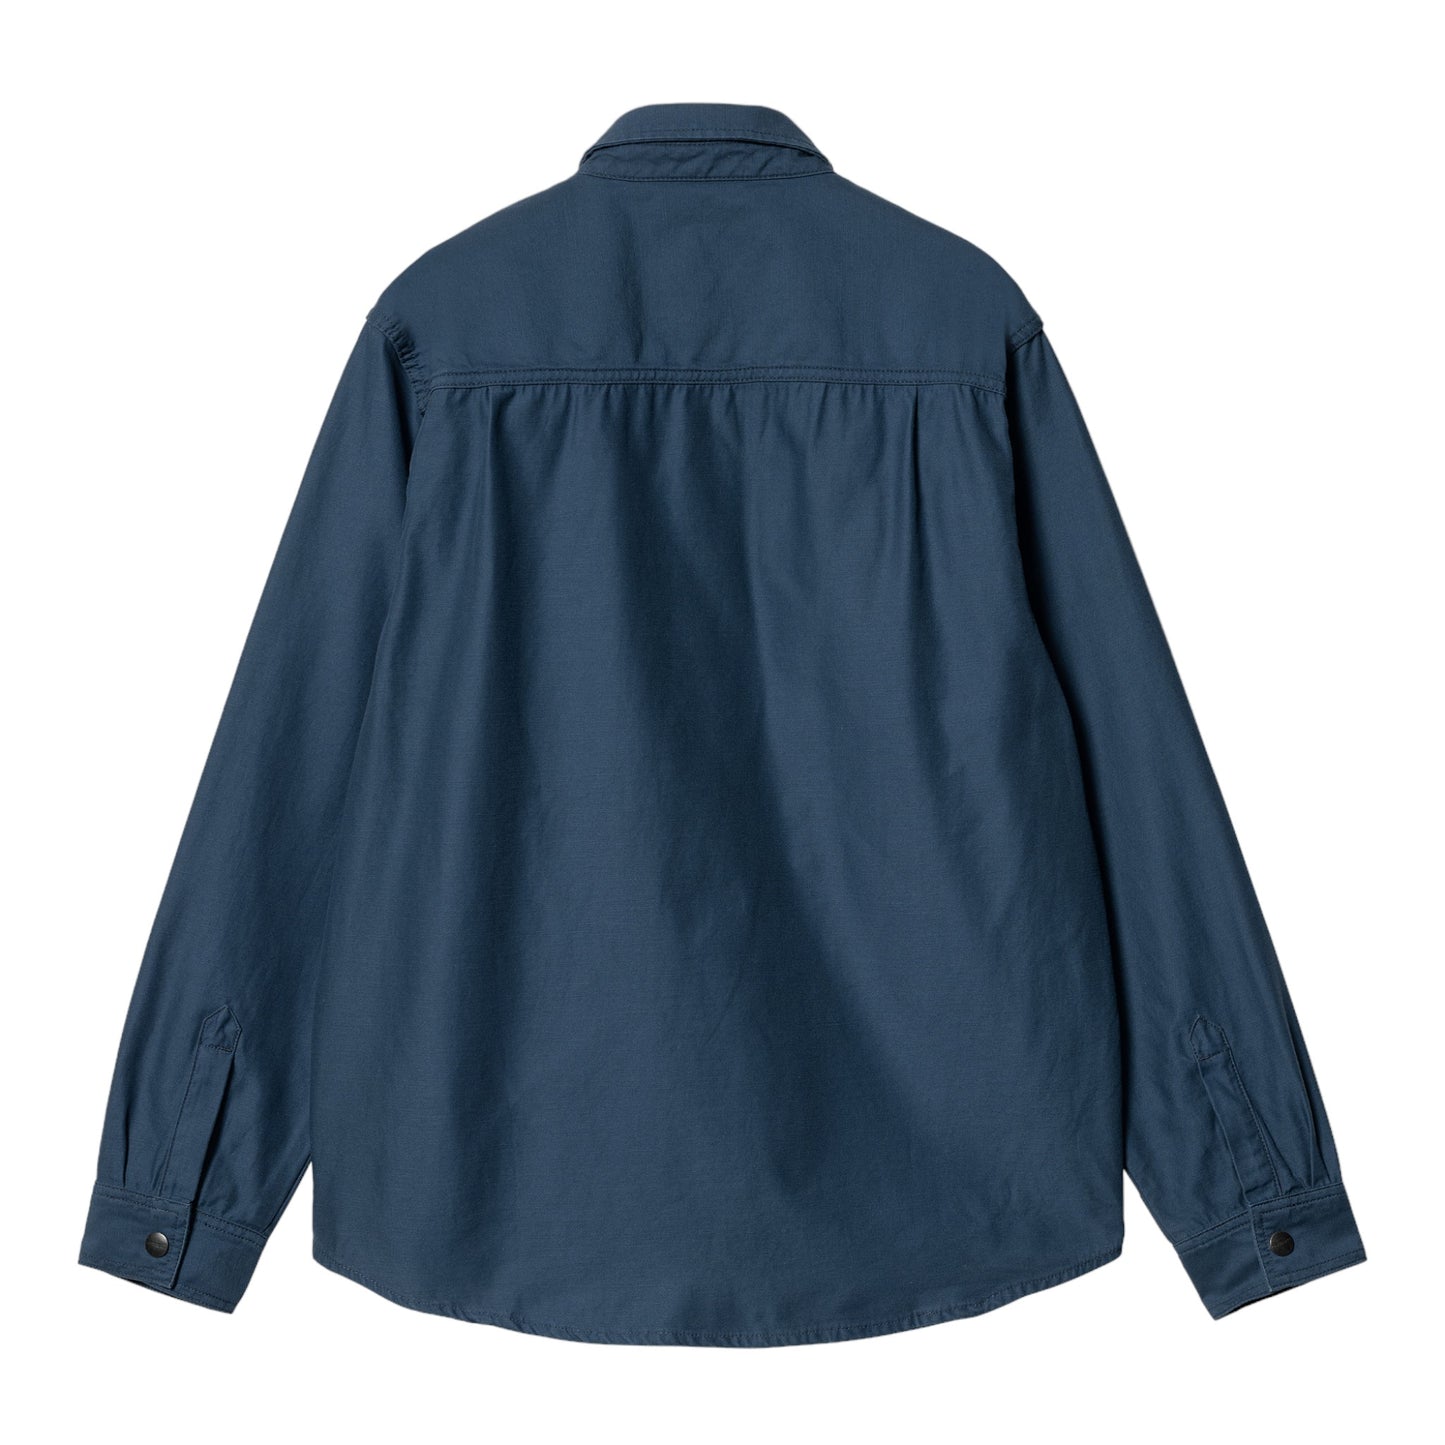 Carhartt Wip Hayworth Shirt Jac - Naval rinsed - Francis Concept